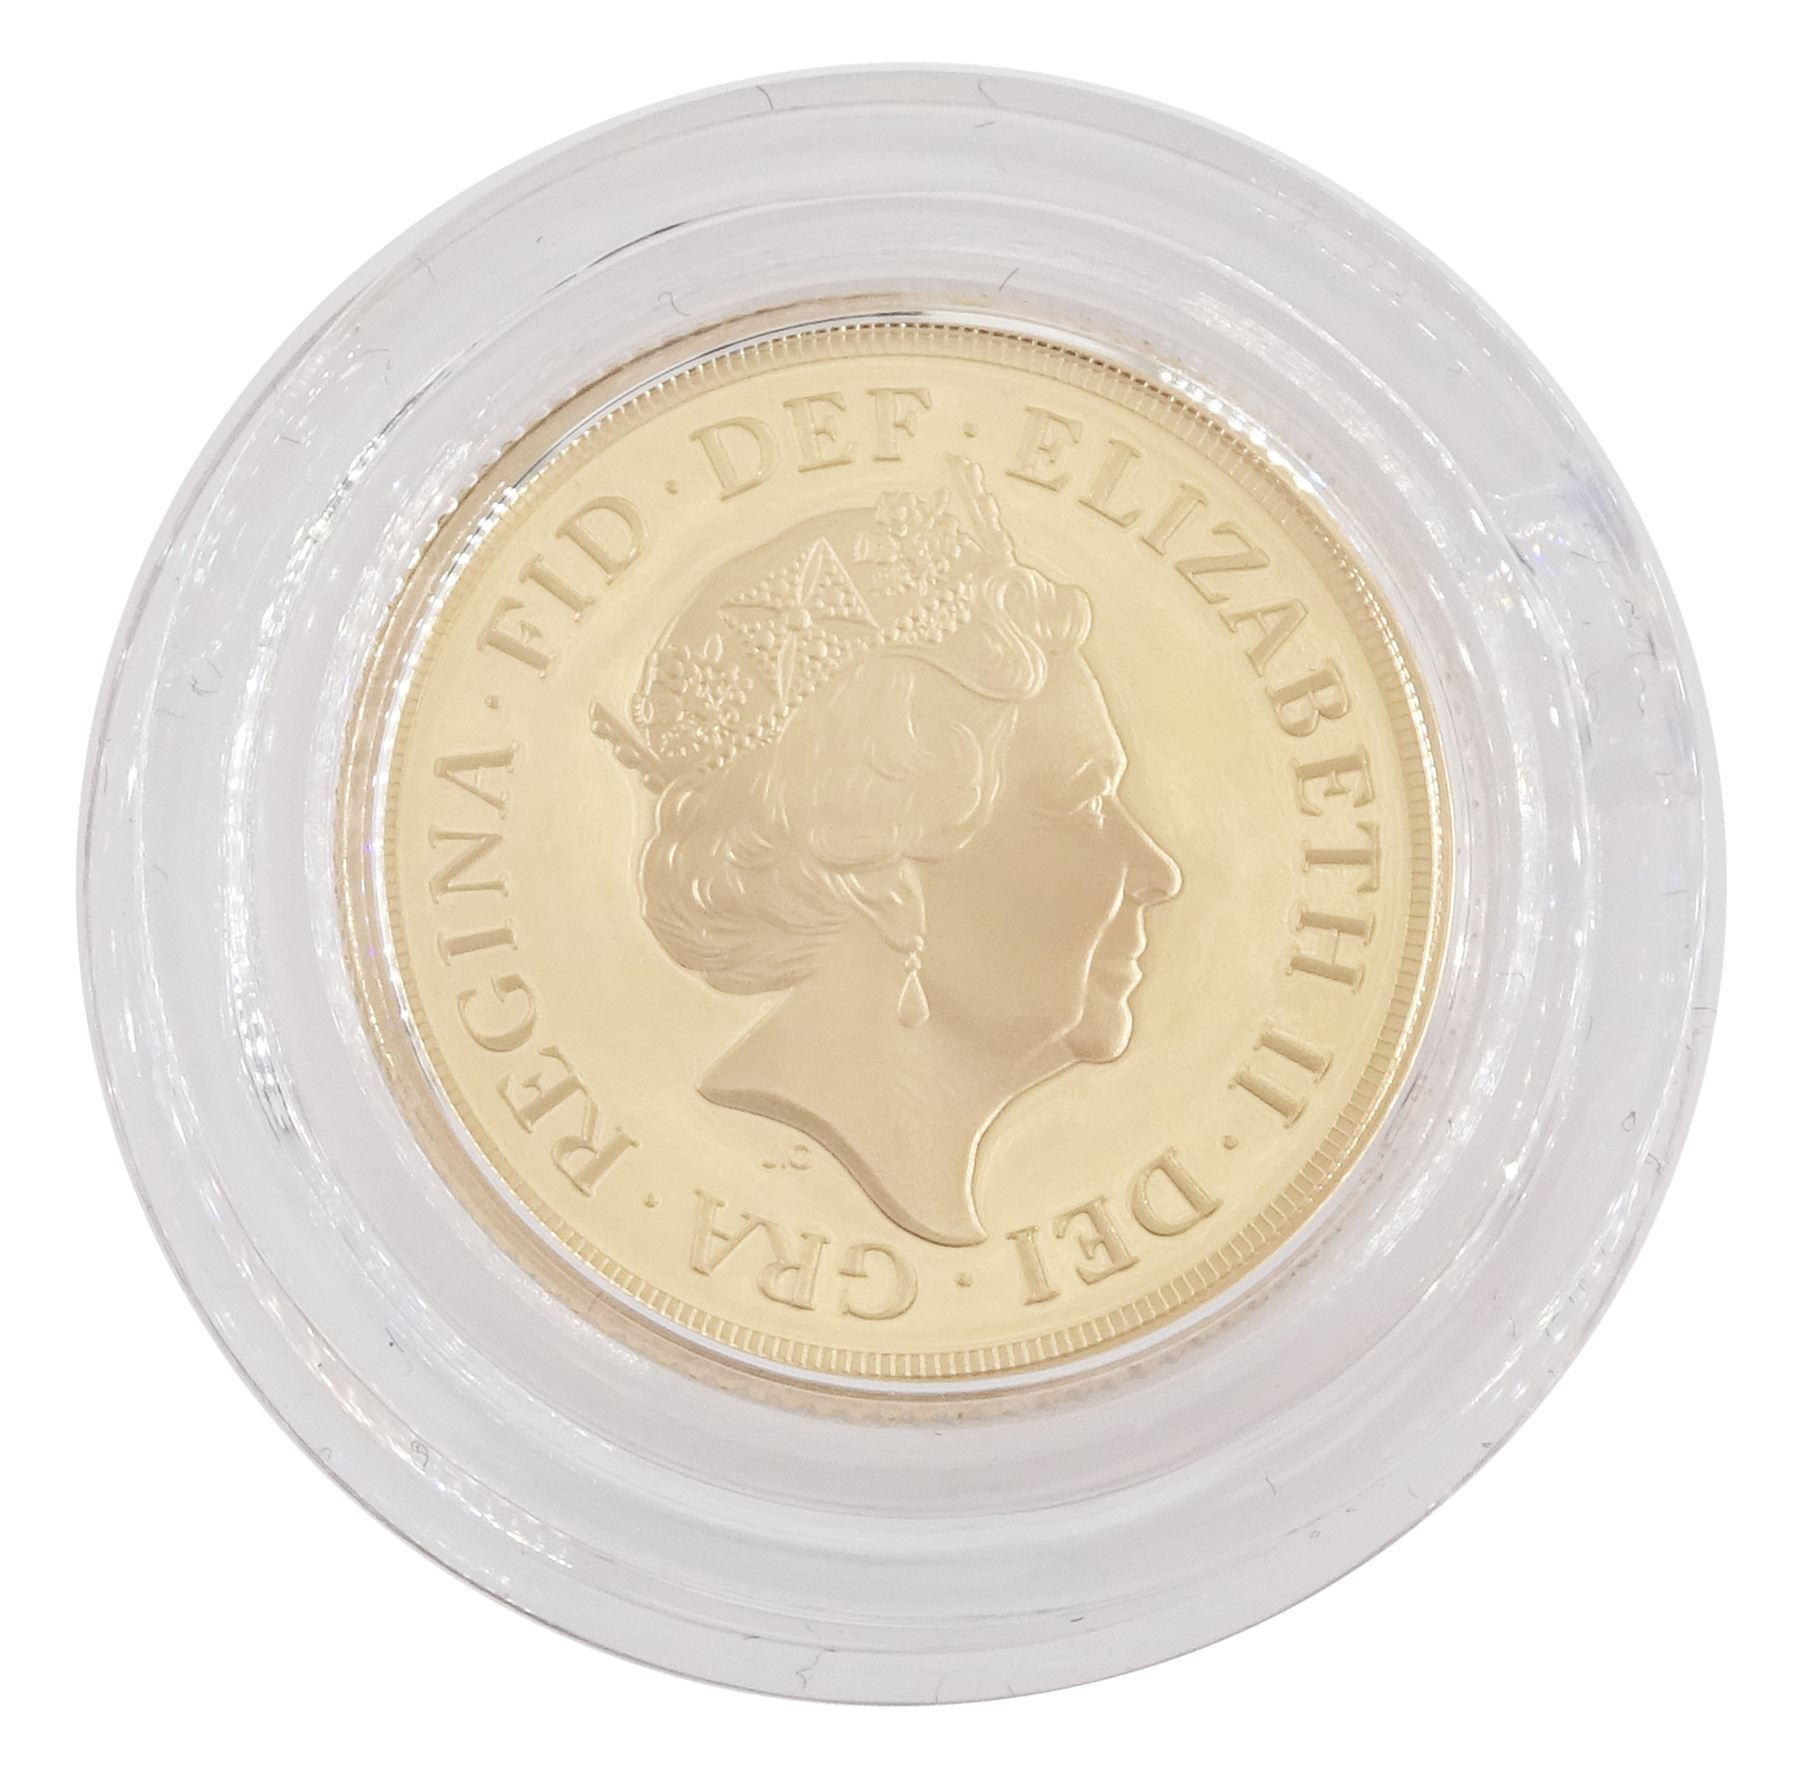 Queen Elizabeth II 2020 gold proof sovereign coin - Image 2 of 3